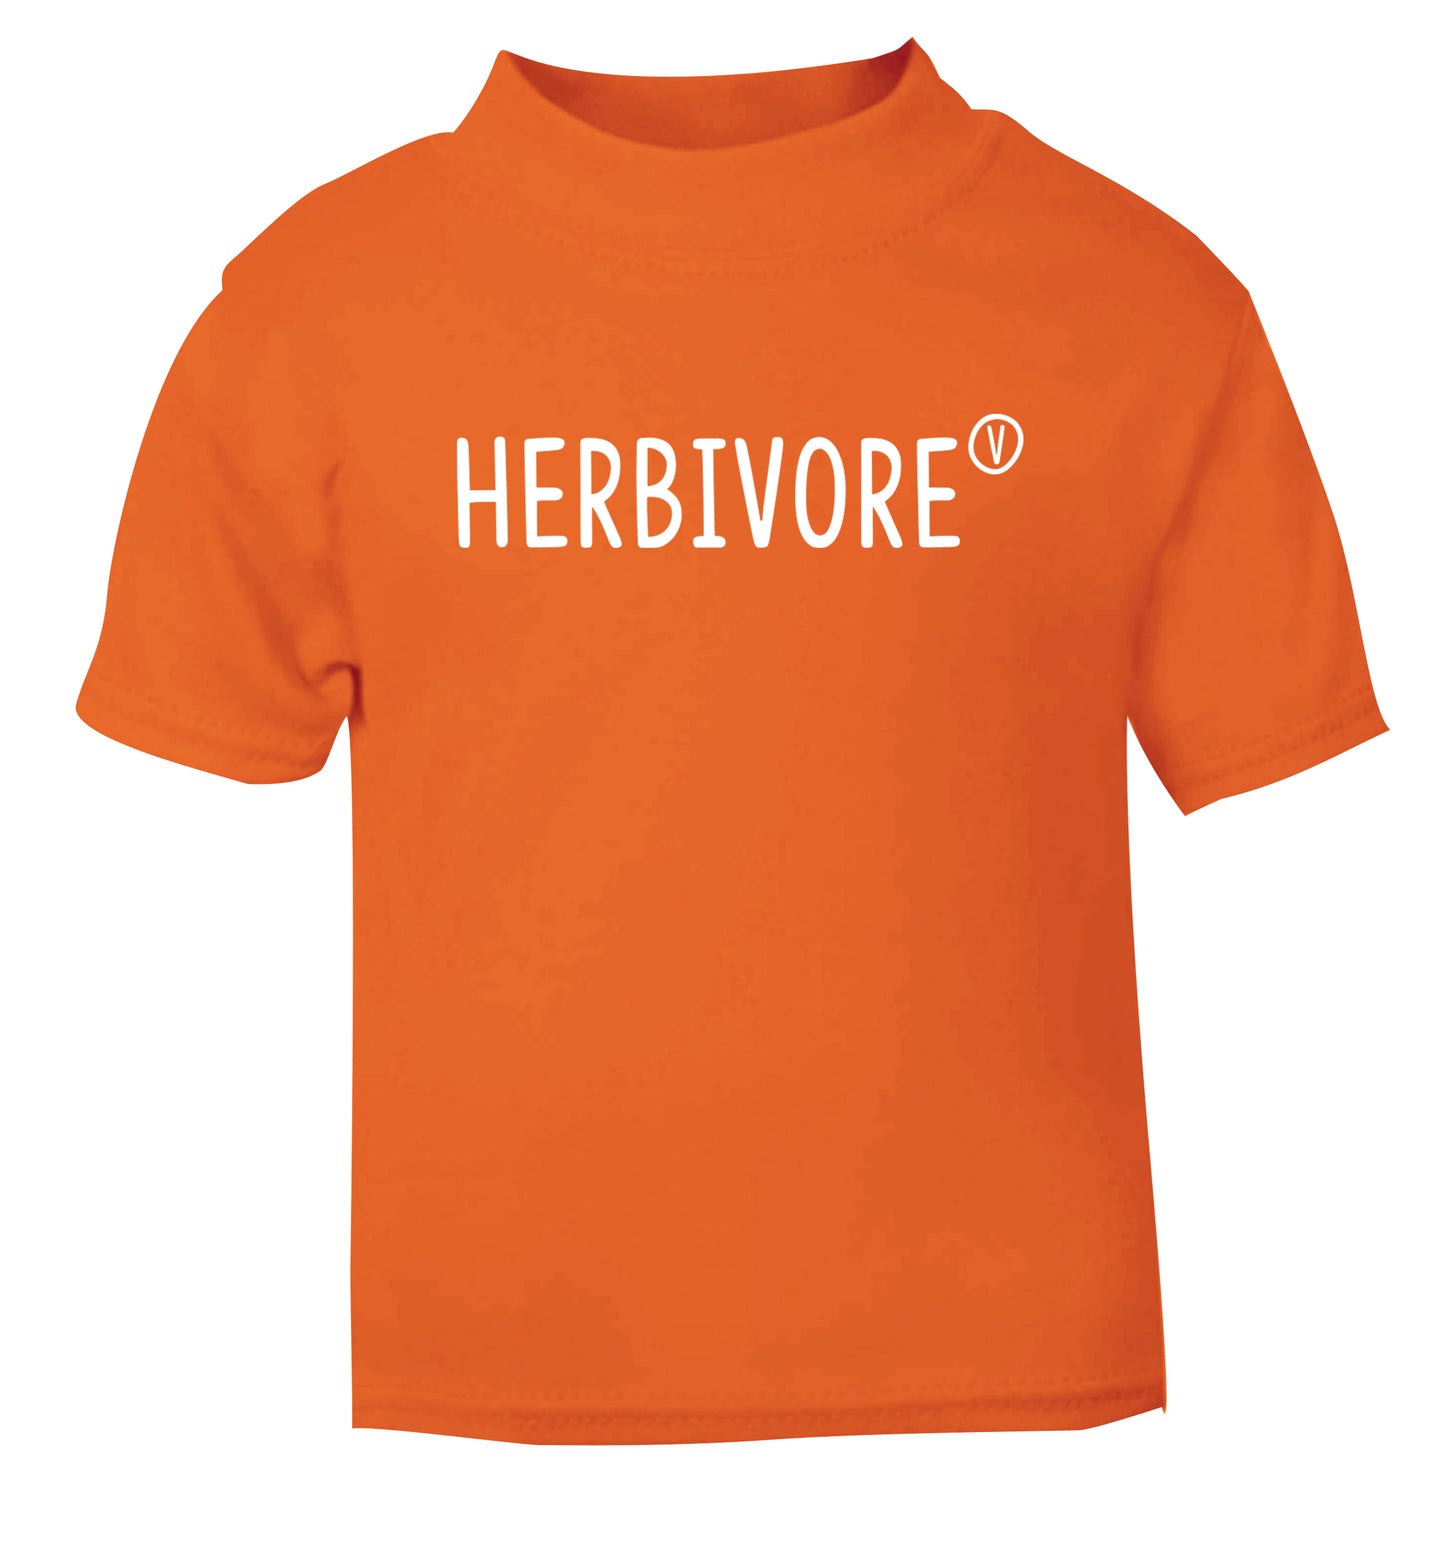 Herbivore orange Baby Toddler Tshirt 2 Years